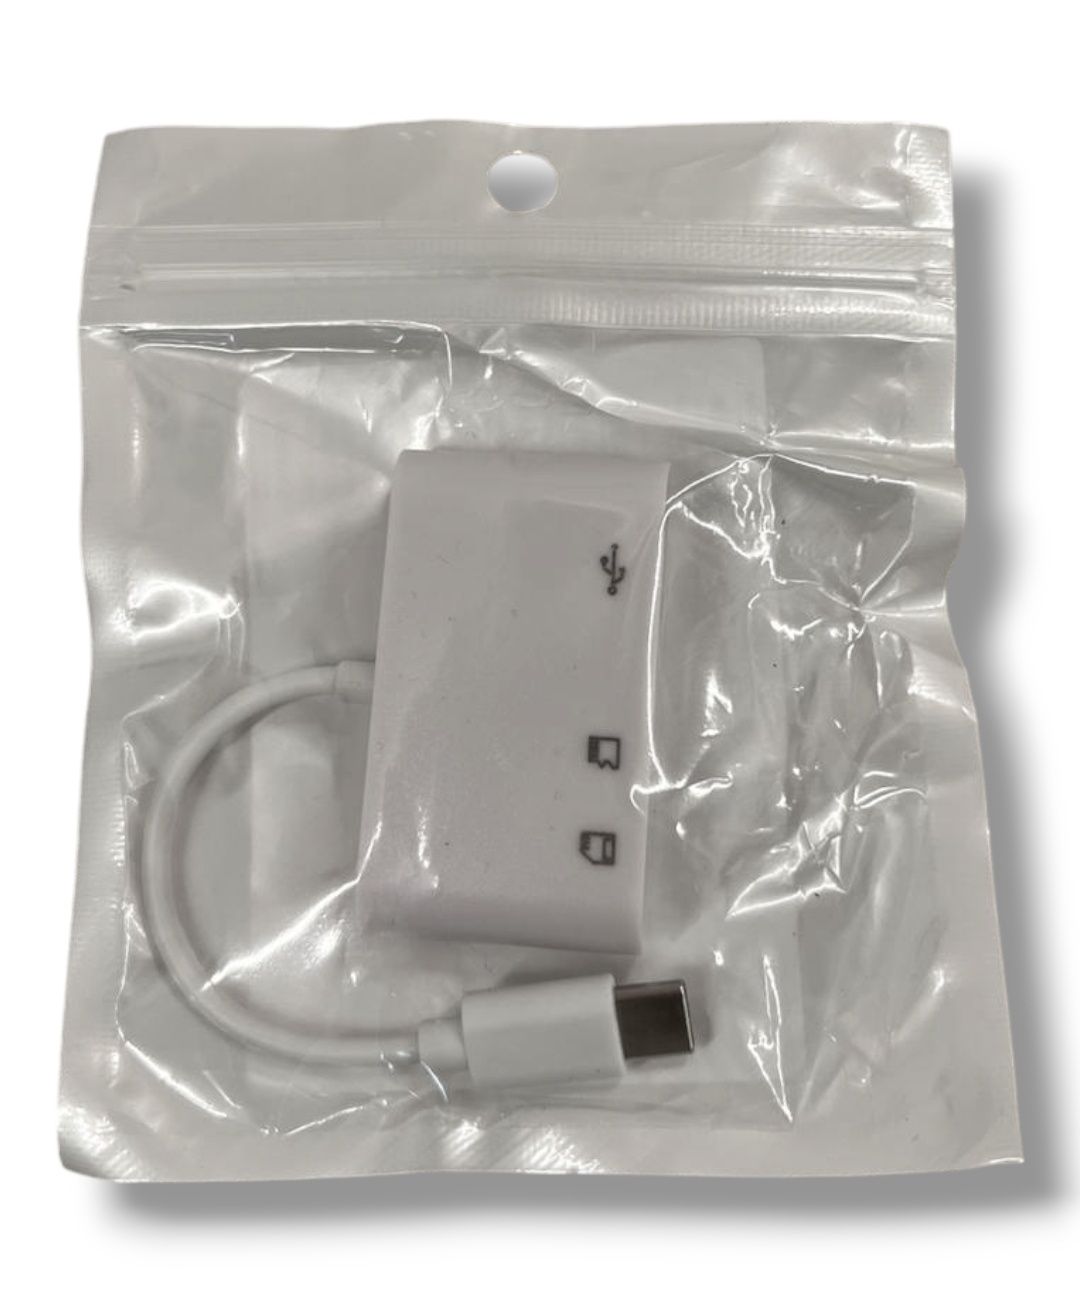 ADAPTER HUB czytnik kart microSD SD TF 3w1 USB USBC OTG smartfon table